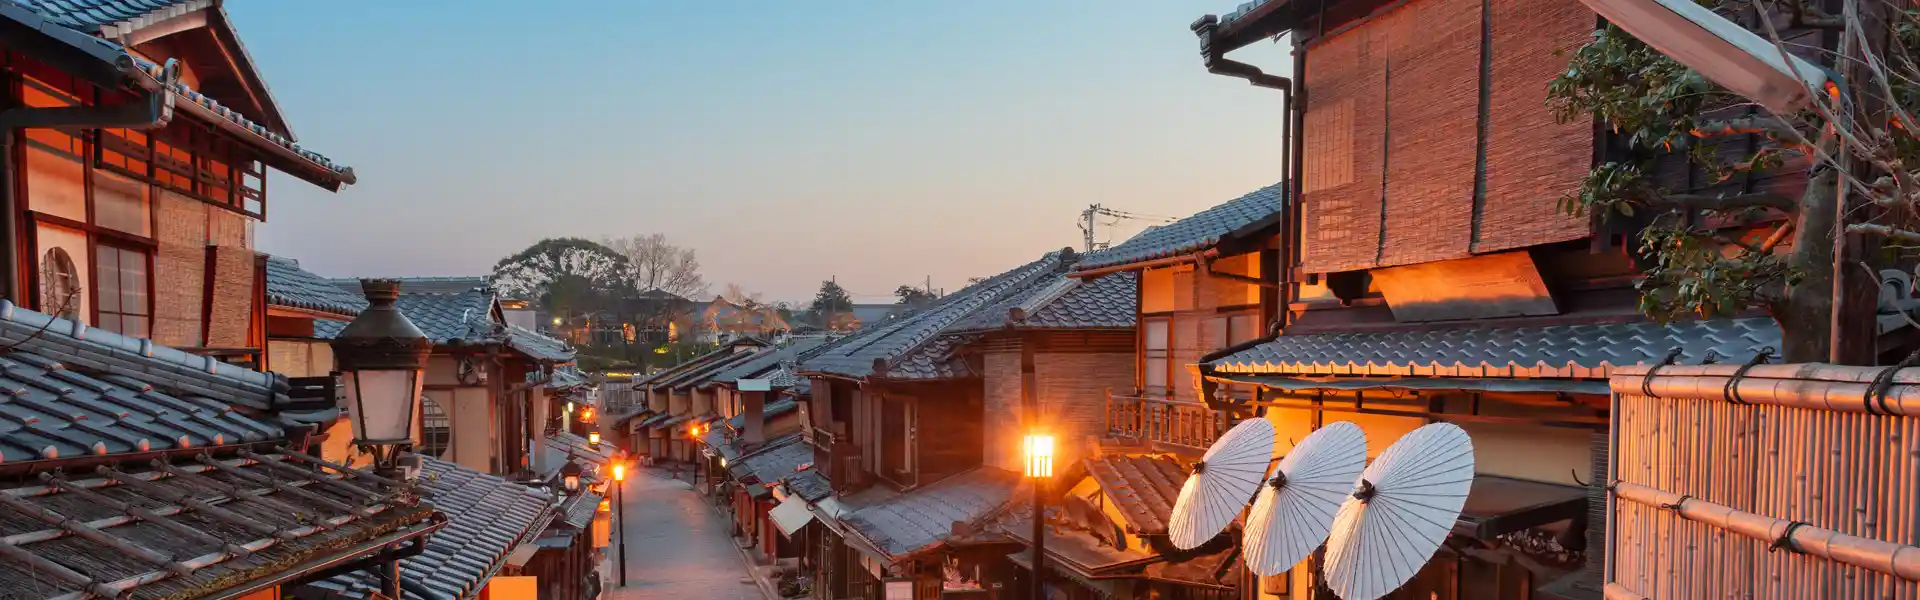 kyoto--japan-old-town-streets-at-twilight-in-highashiyama-district